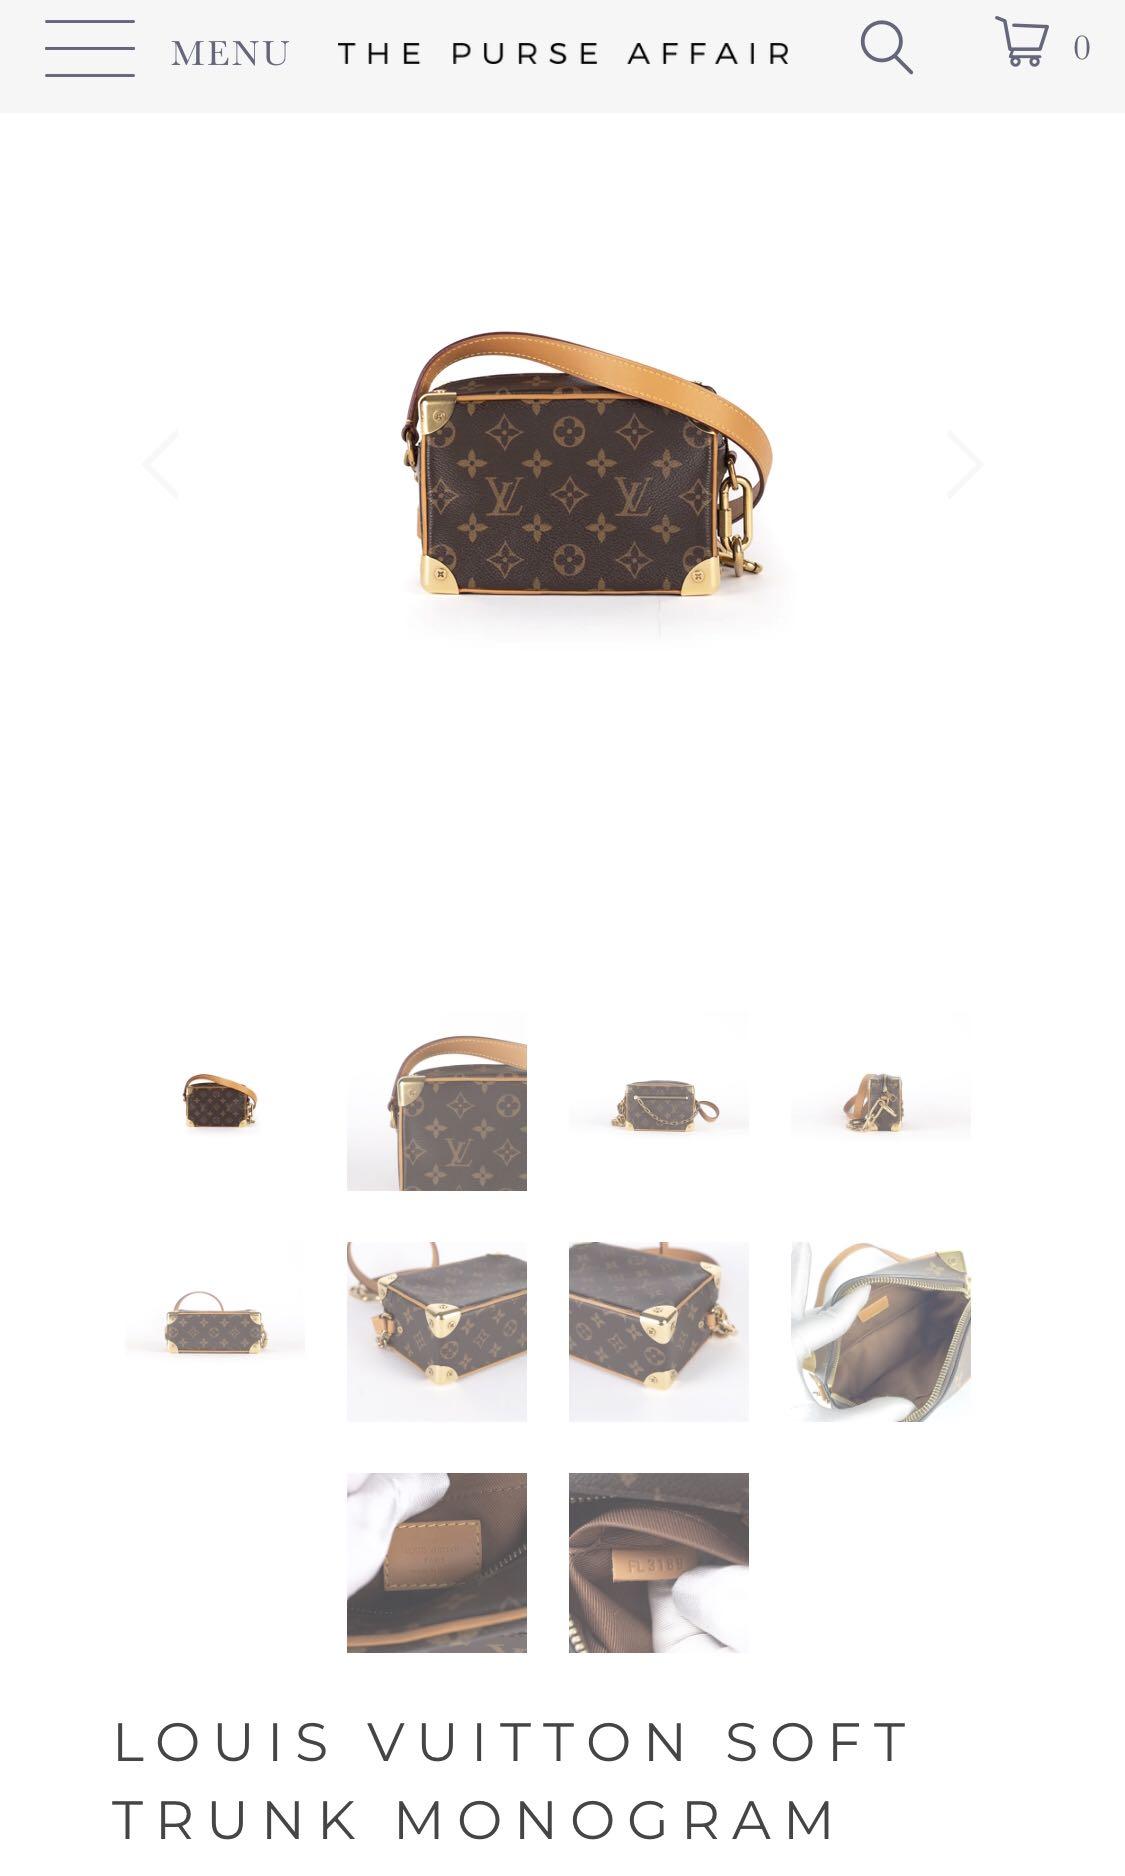 Louis Vuitton Soft Trunk Pouch Monogram - THE PURSE AFFAIR